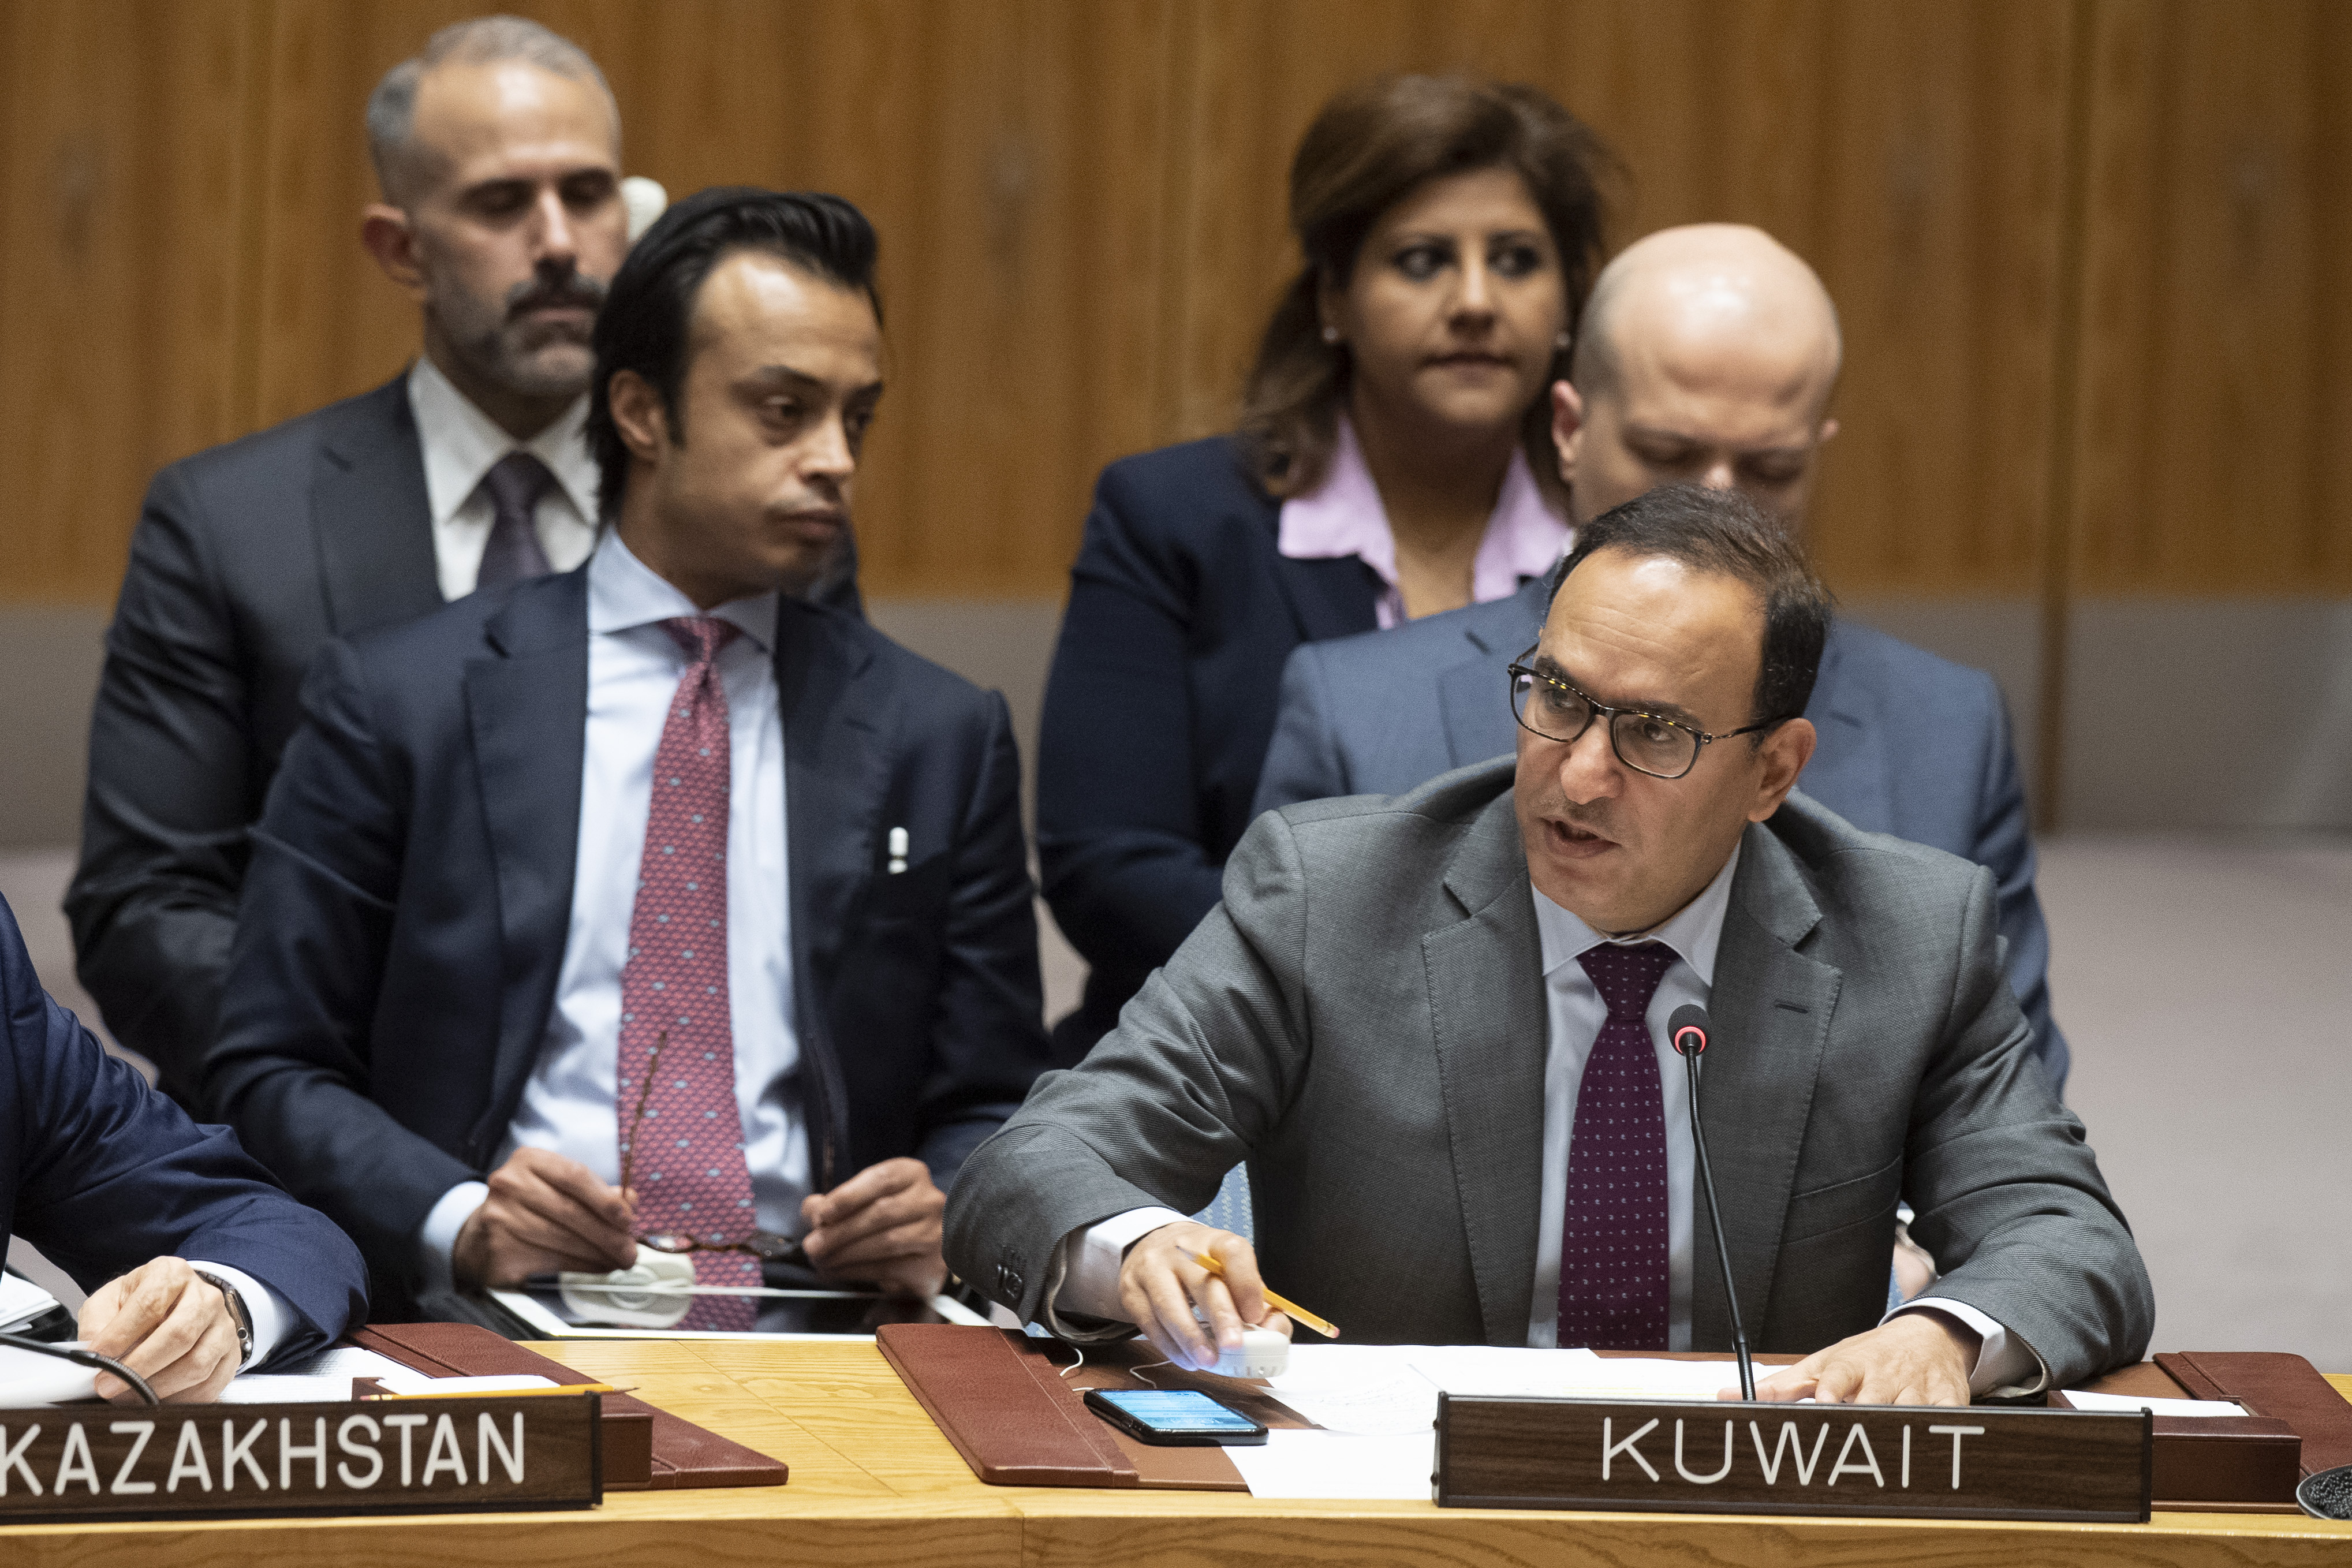 Kuwait's Permanent Representative to UN, Ambassador Mansour Al-Otaibi